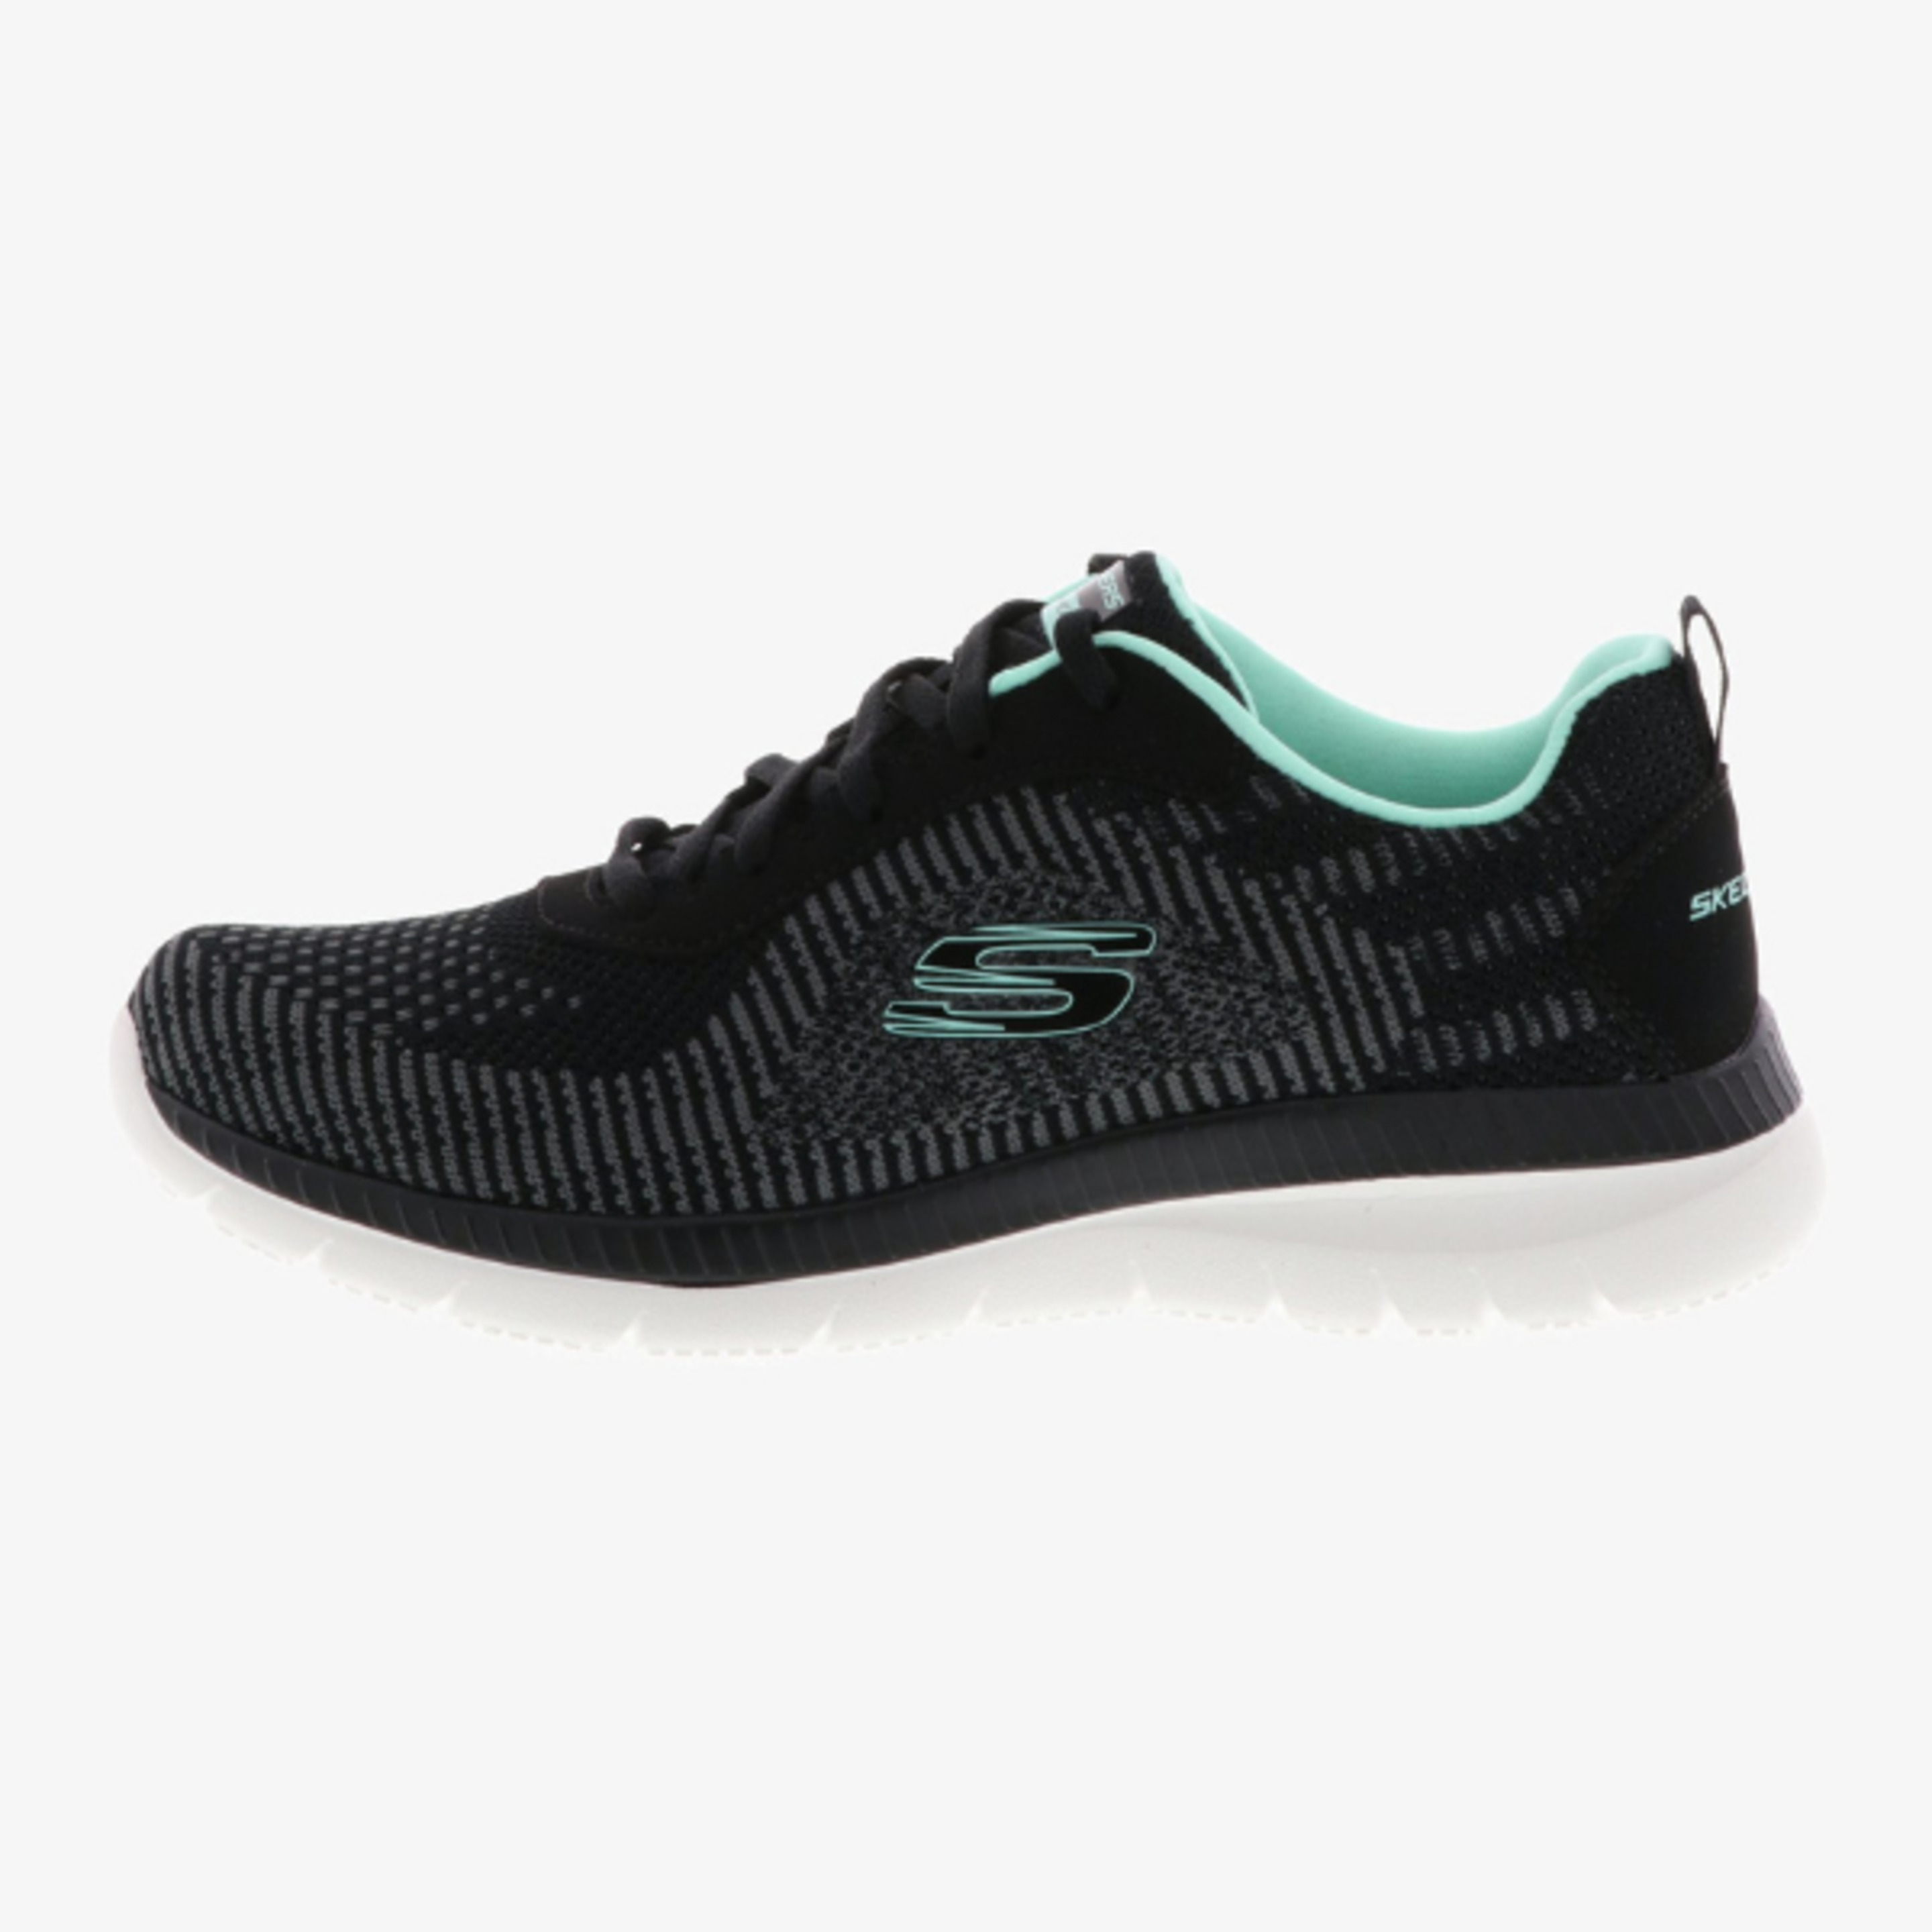 Skechers Bountiful-purist. Black/turquoise. 149220/bktq. - Negro/Turquesa - Zapatillas Deportivas Mujer.  MKP